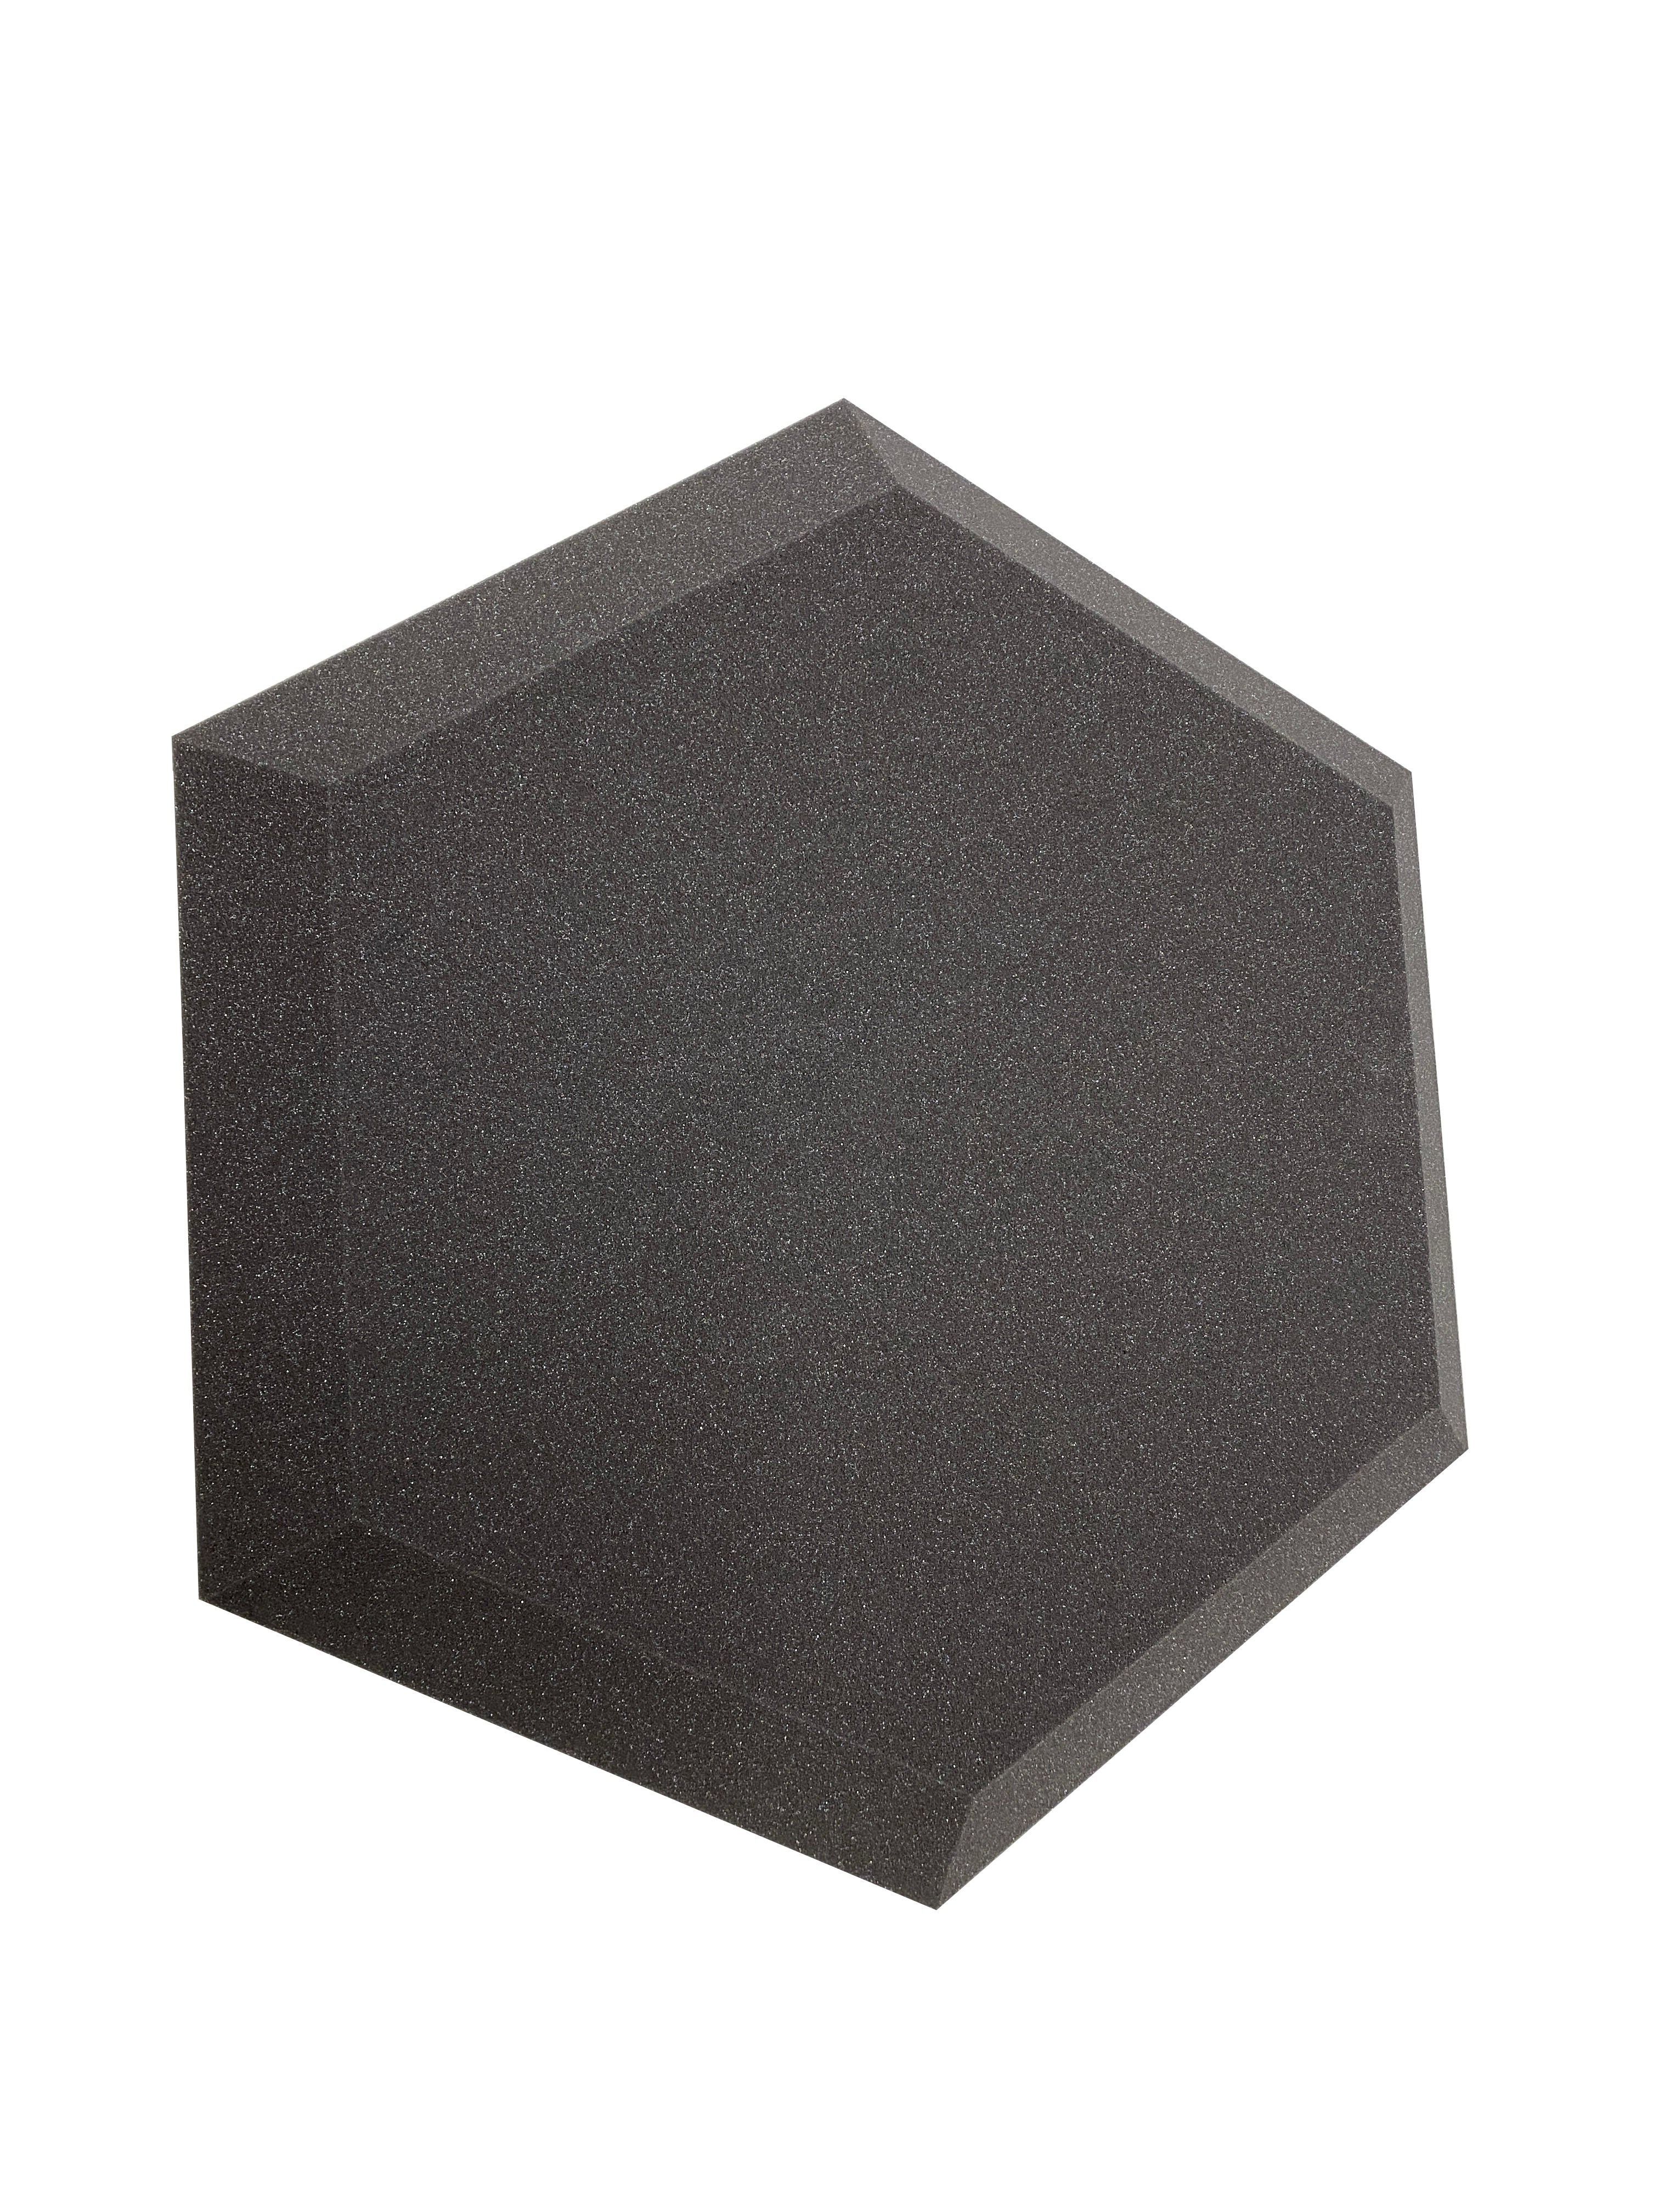 Hexatile3 Acoustic Studio Foam Tile Pack – 12 Fliesen, 2,88 m² Abdeckung